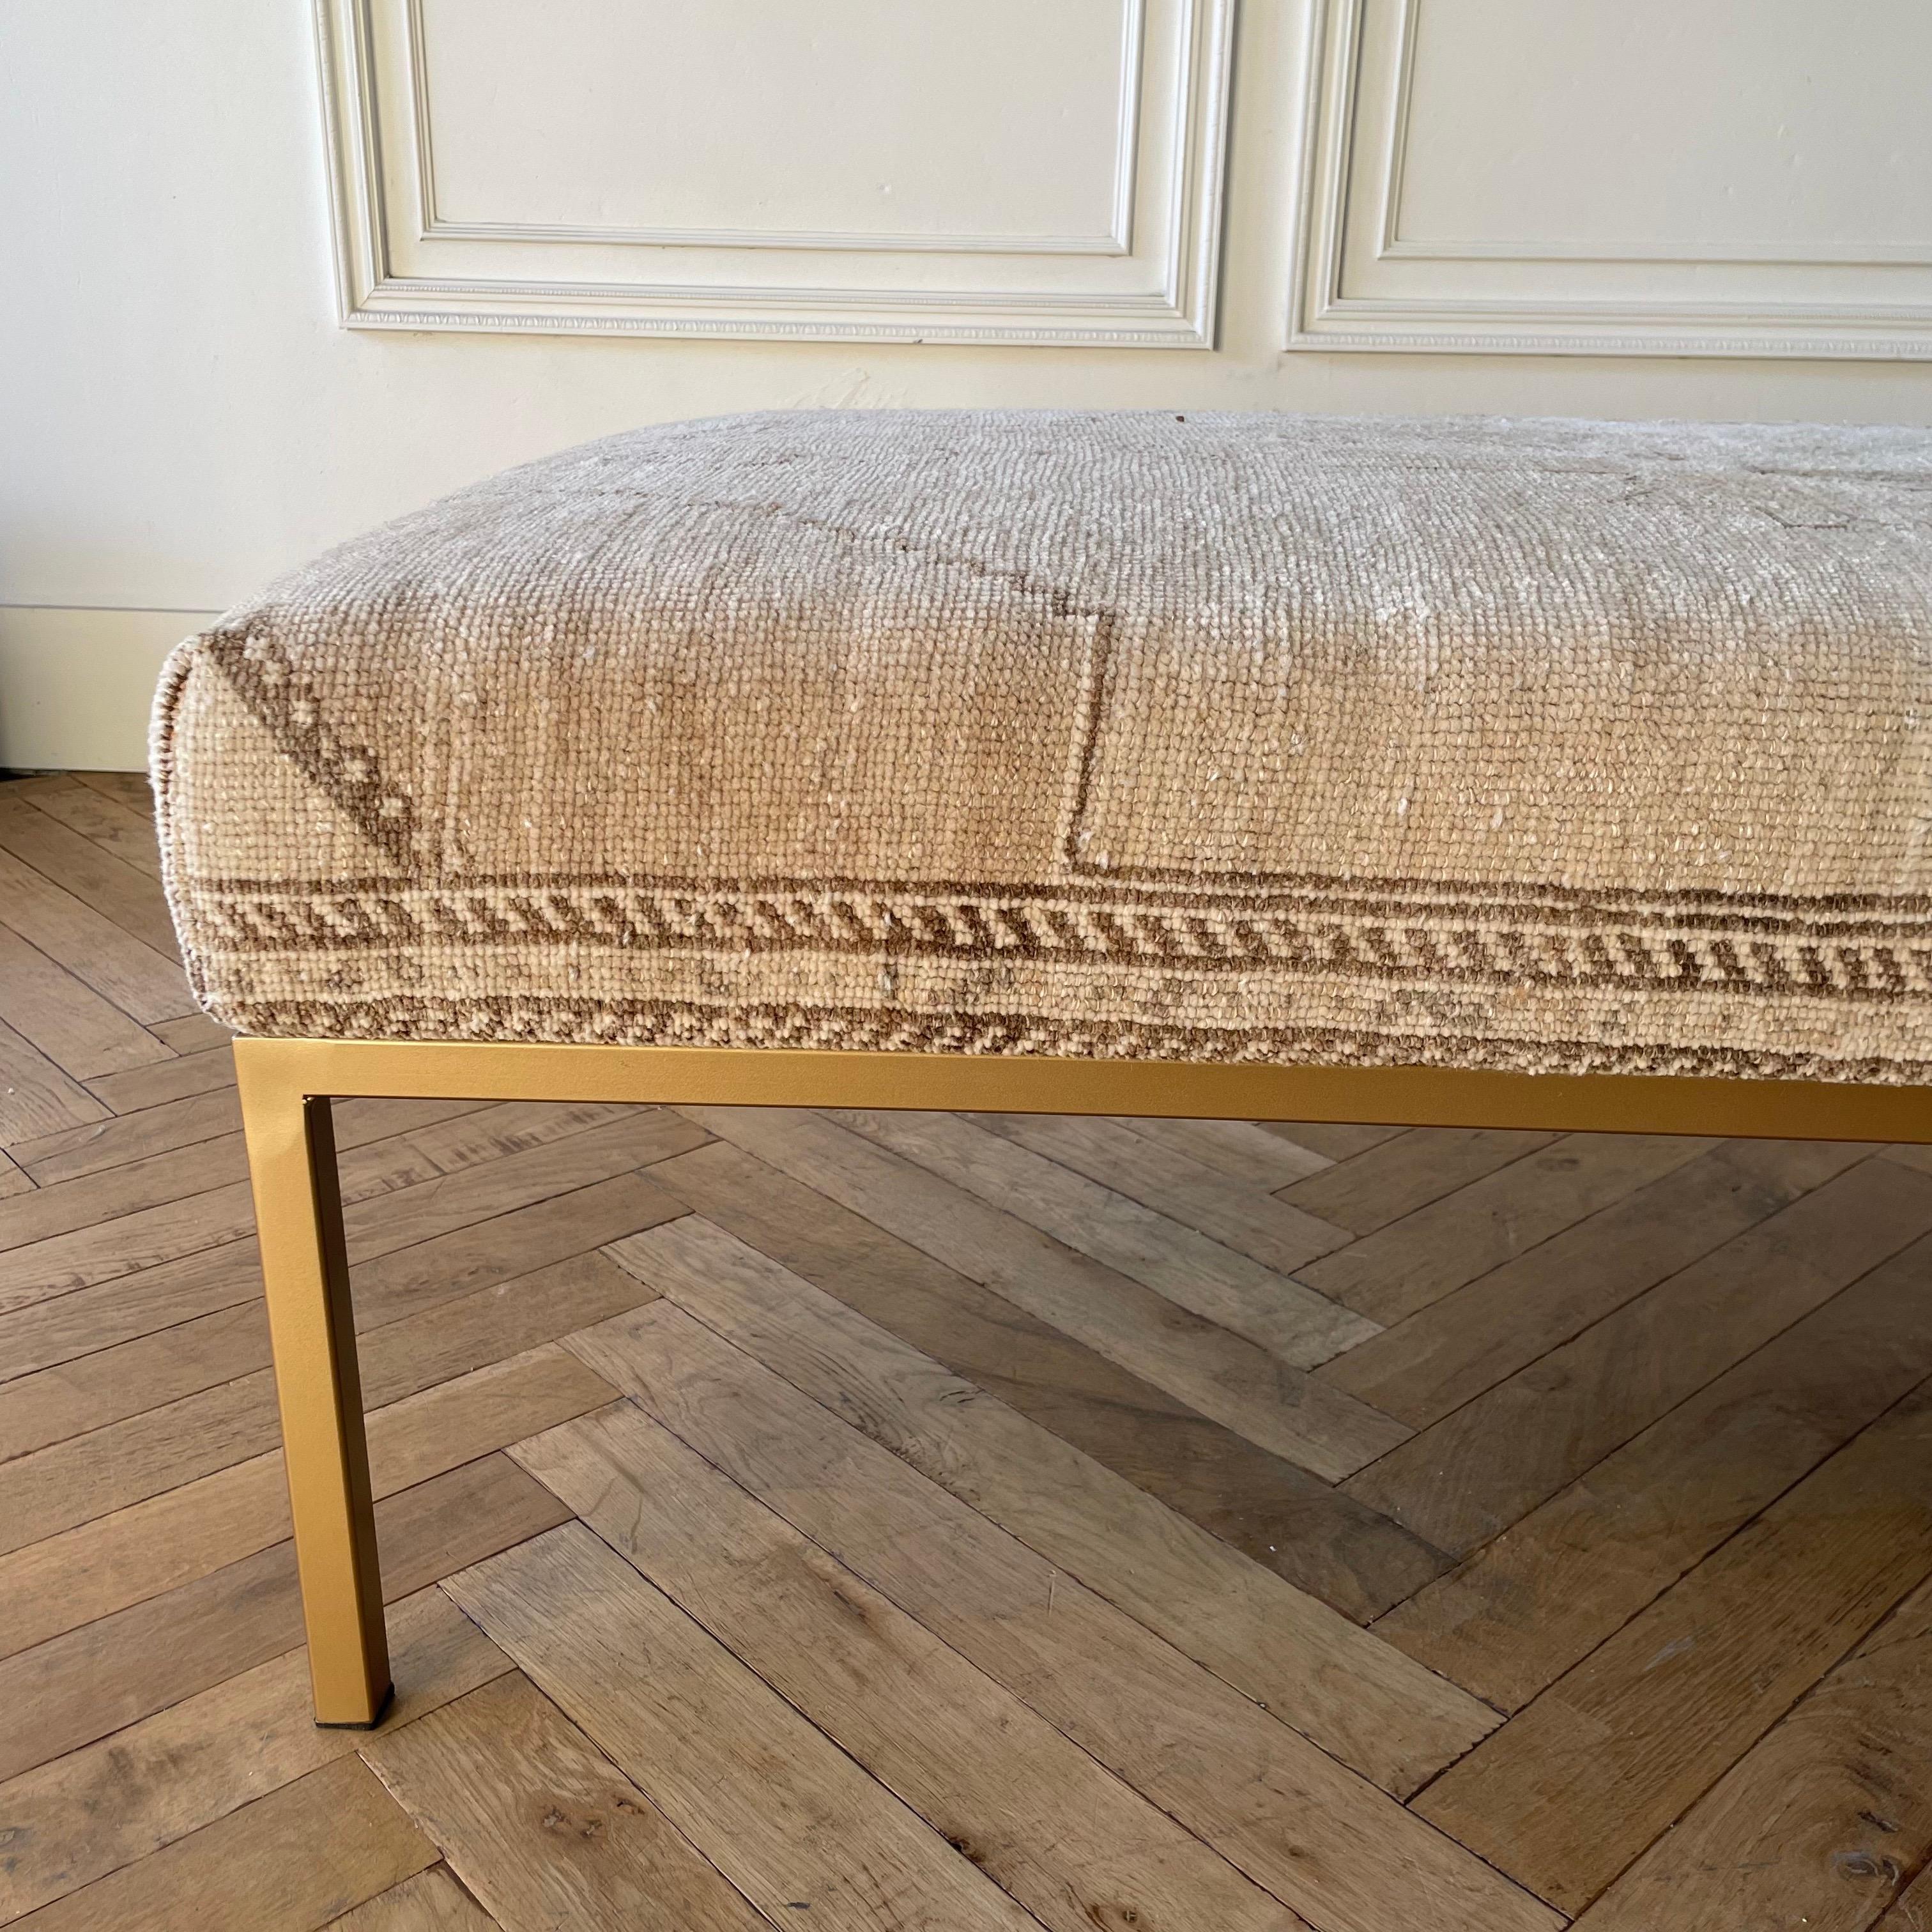 Custom made Turkish wool rug ottoman with metal legs. Measures: 65” x 31” x 18”.